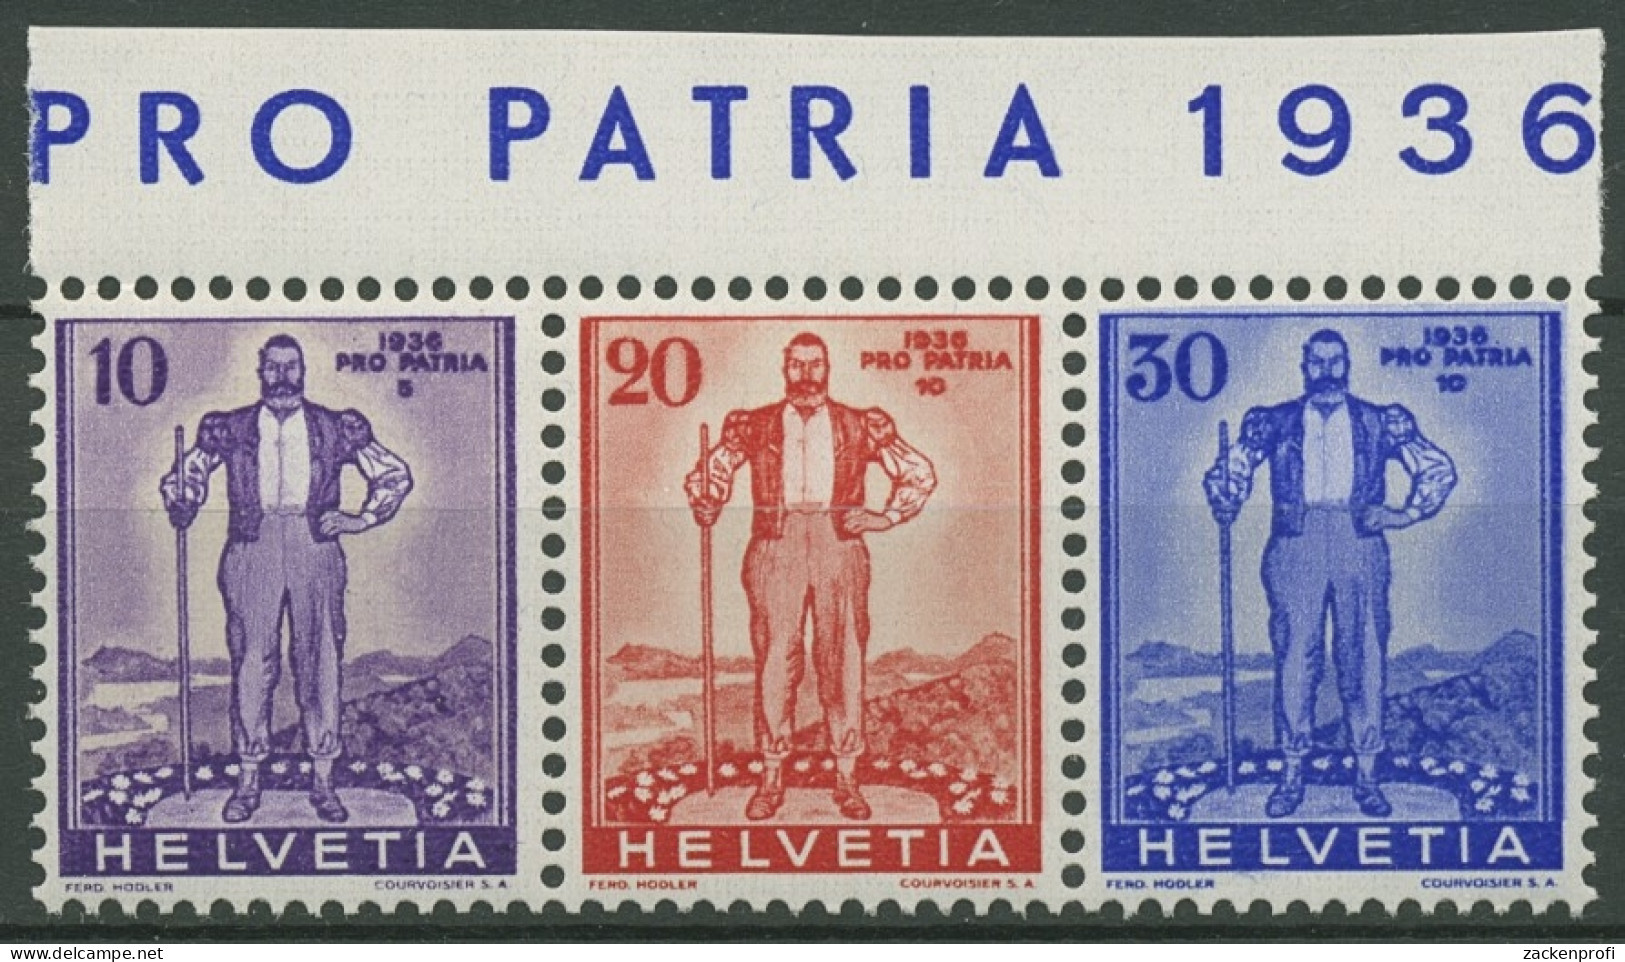 Schweiz 1936 Pro Patria Zusammendruck Aus Block 2, A 294/96 ZD Postfrisch - Ongebruikt